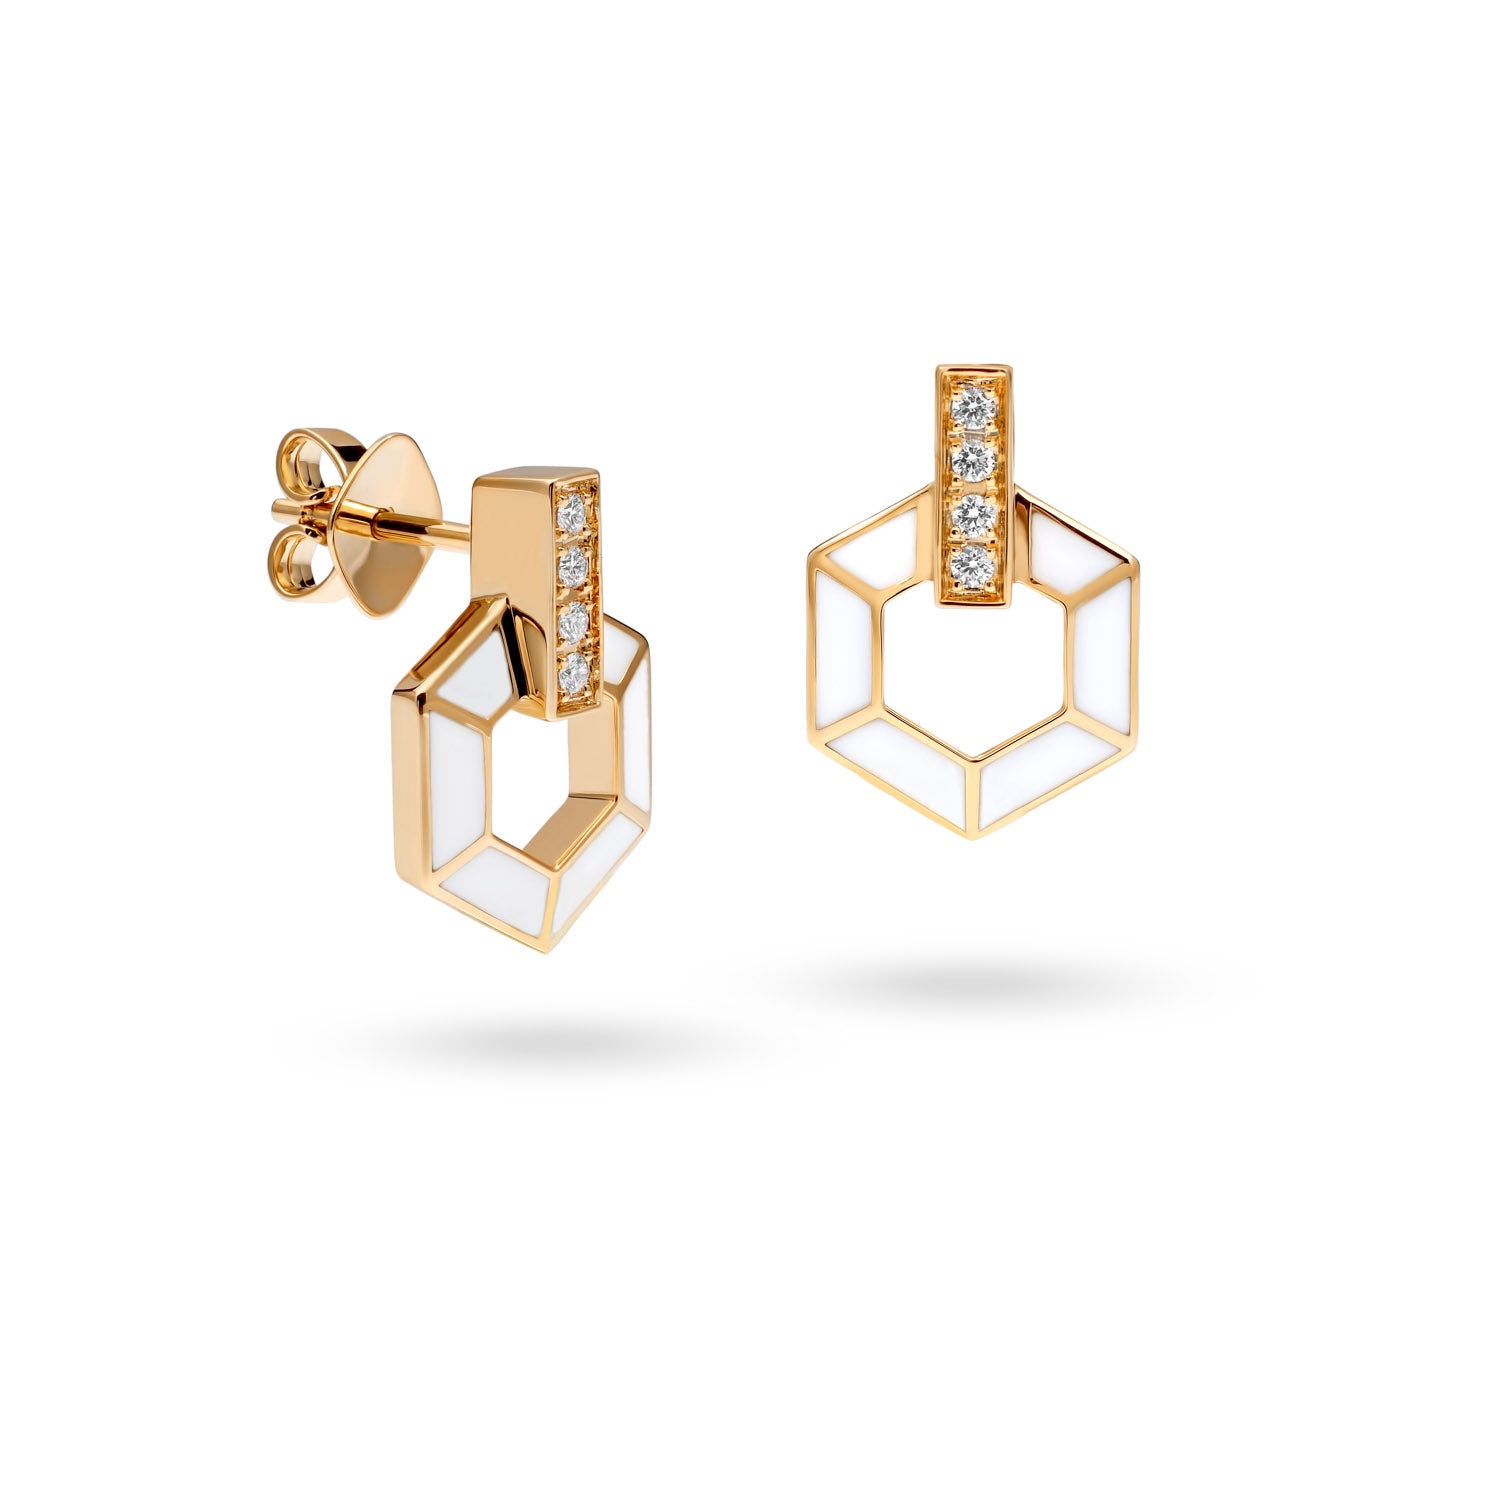 HONEY HONEY Honeycomb Earrings with Enamel and Diamonds